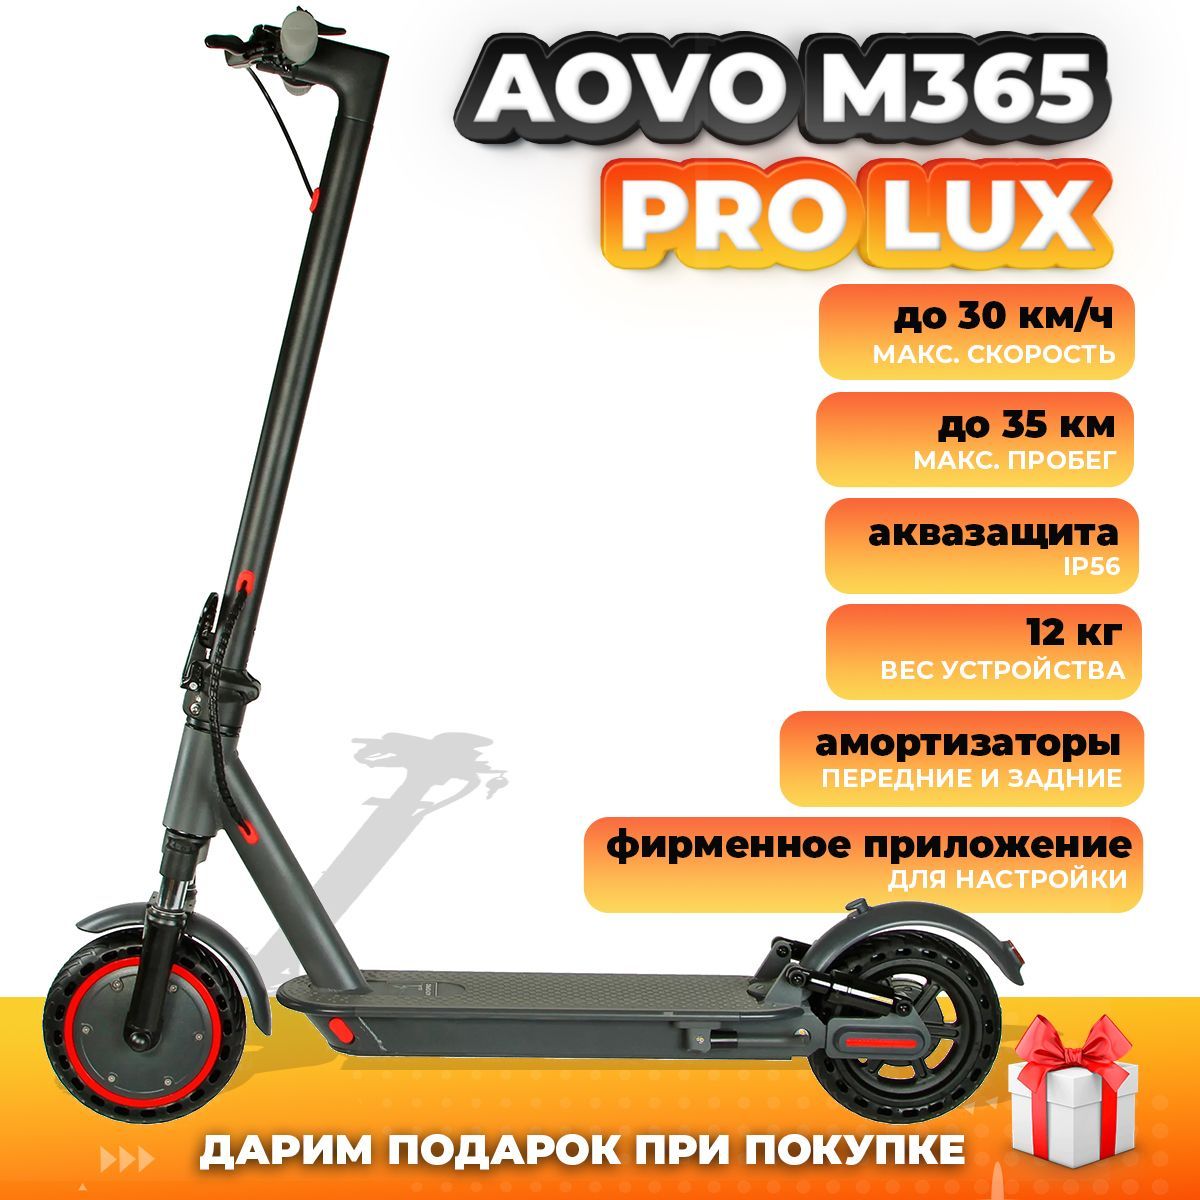 Aovo m365 pro lux. Электросамокат aovo m365 Pro Lux.